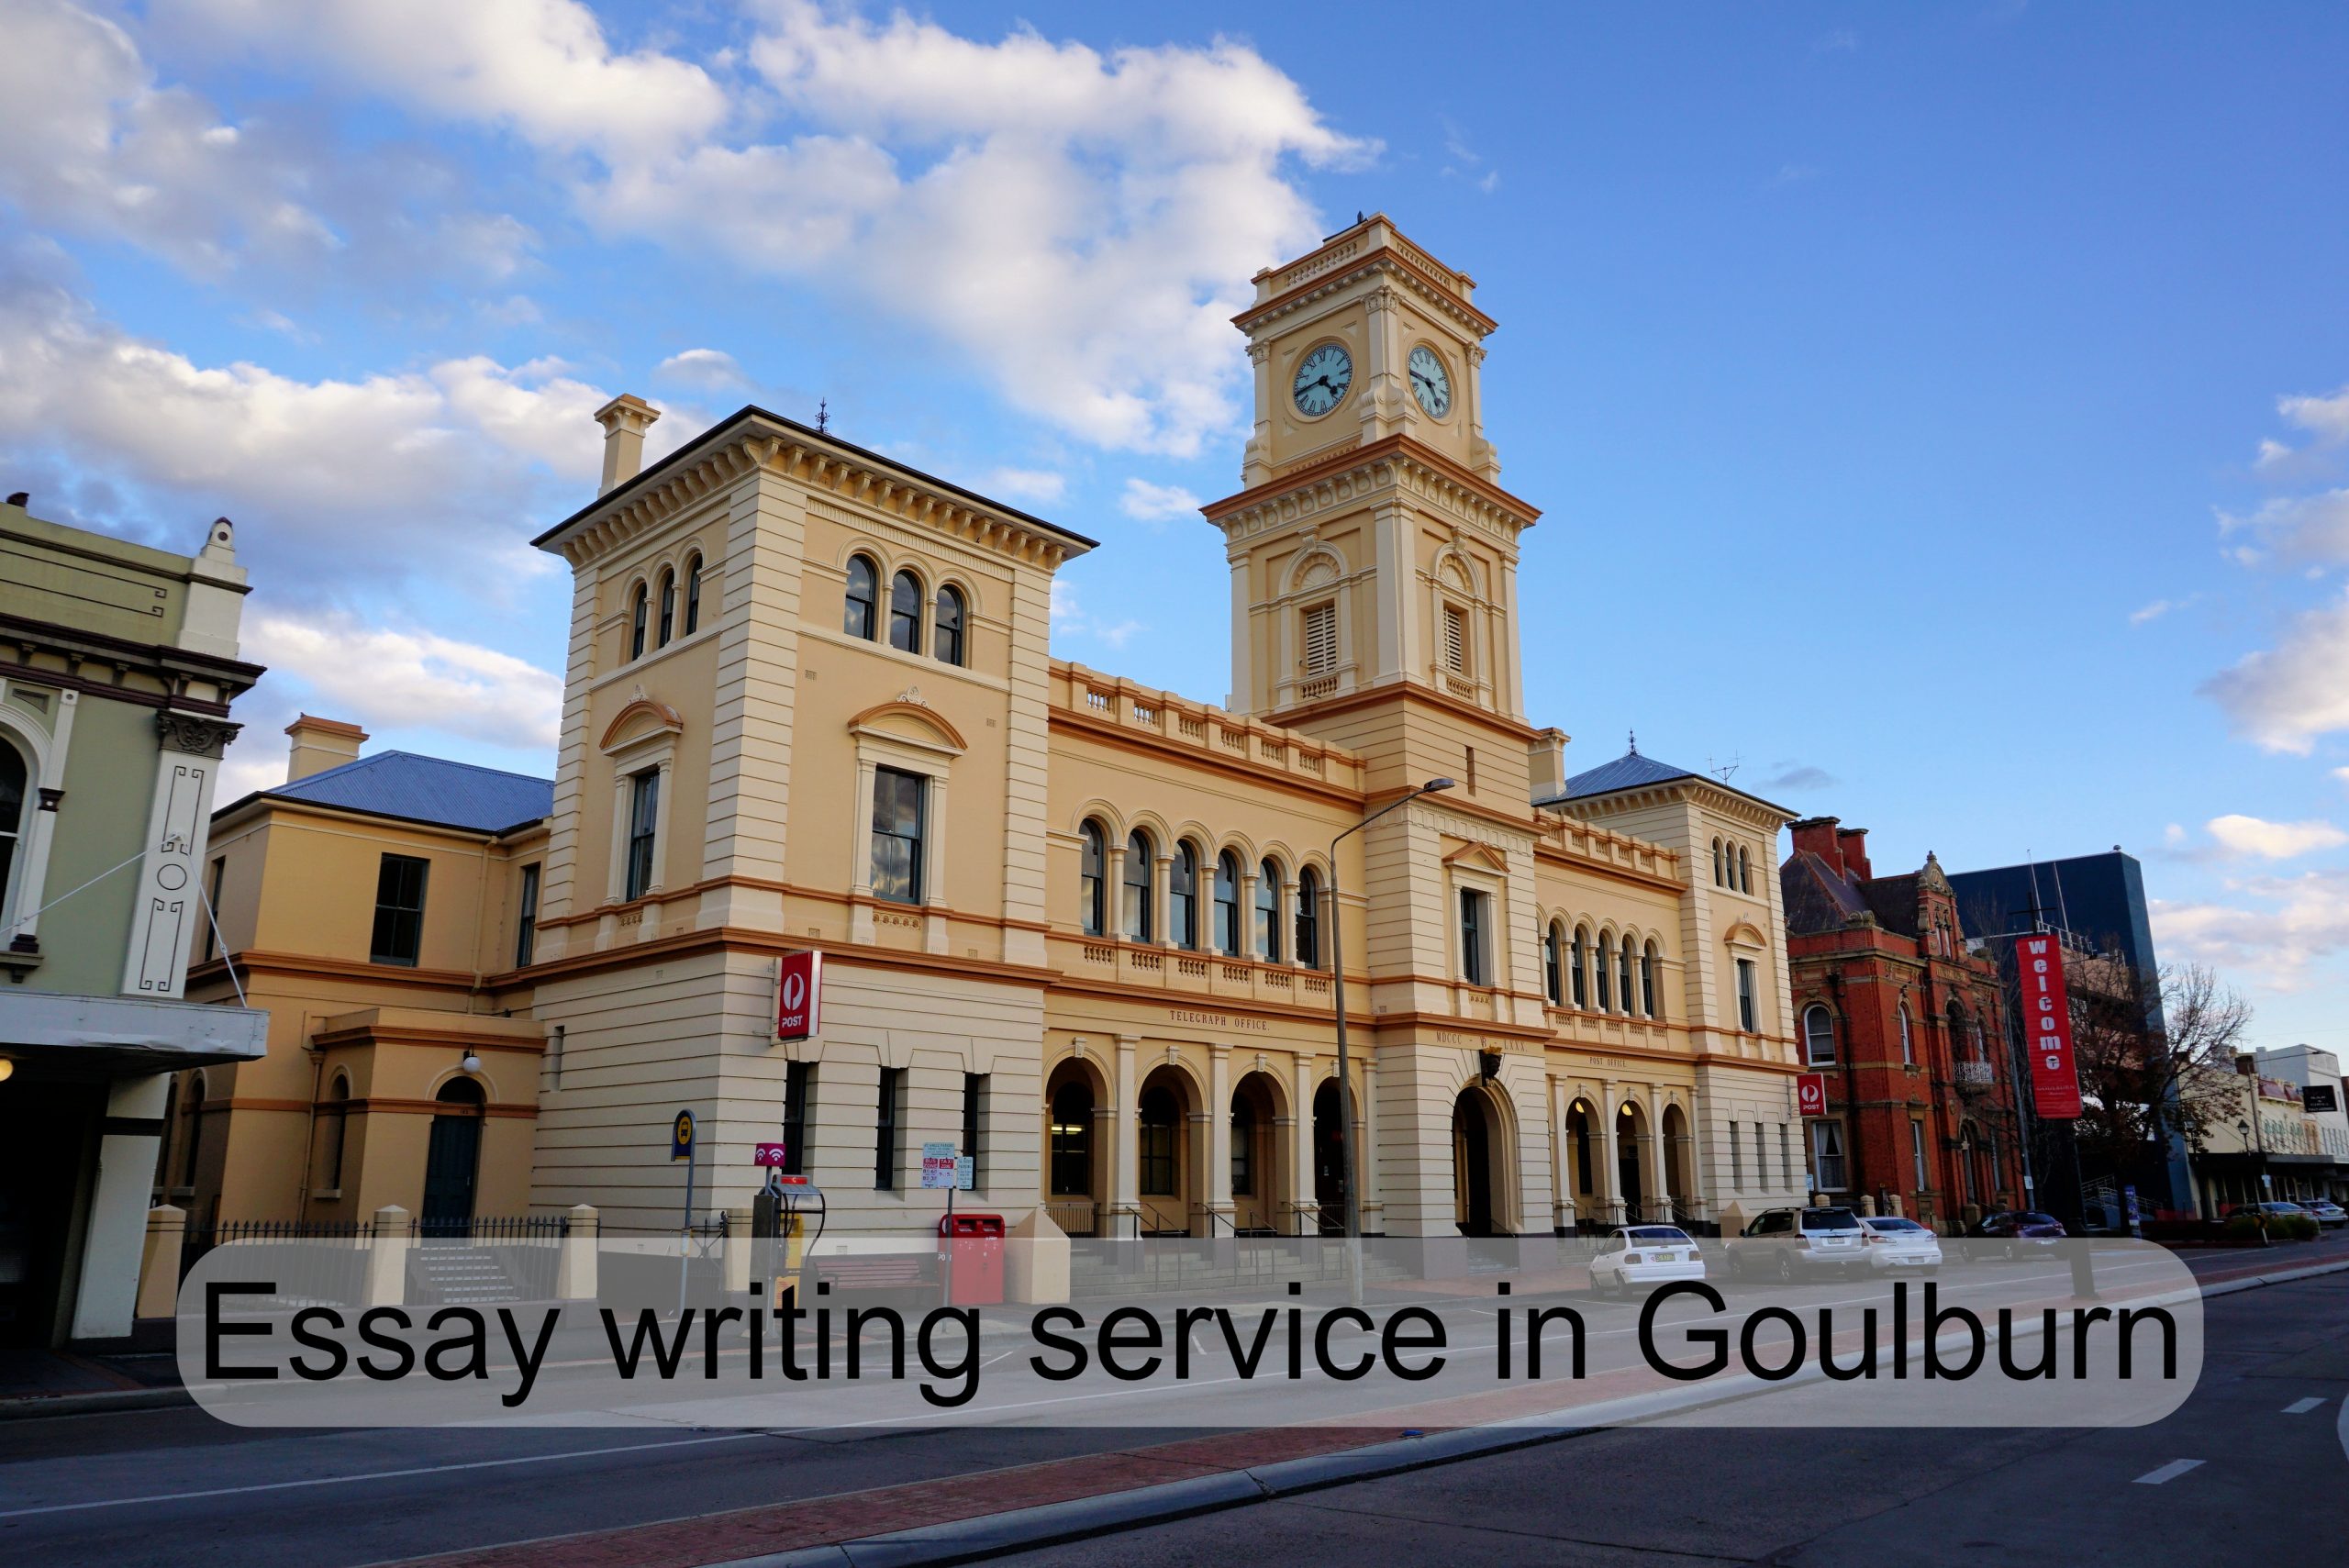 Essay writing service in Goulburn